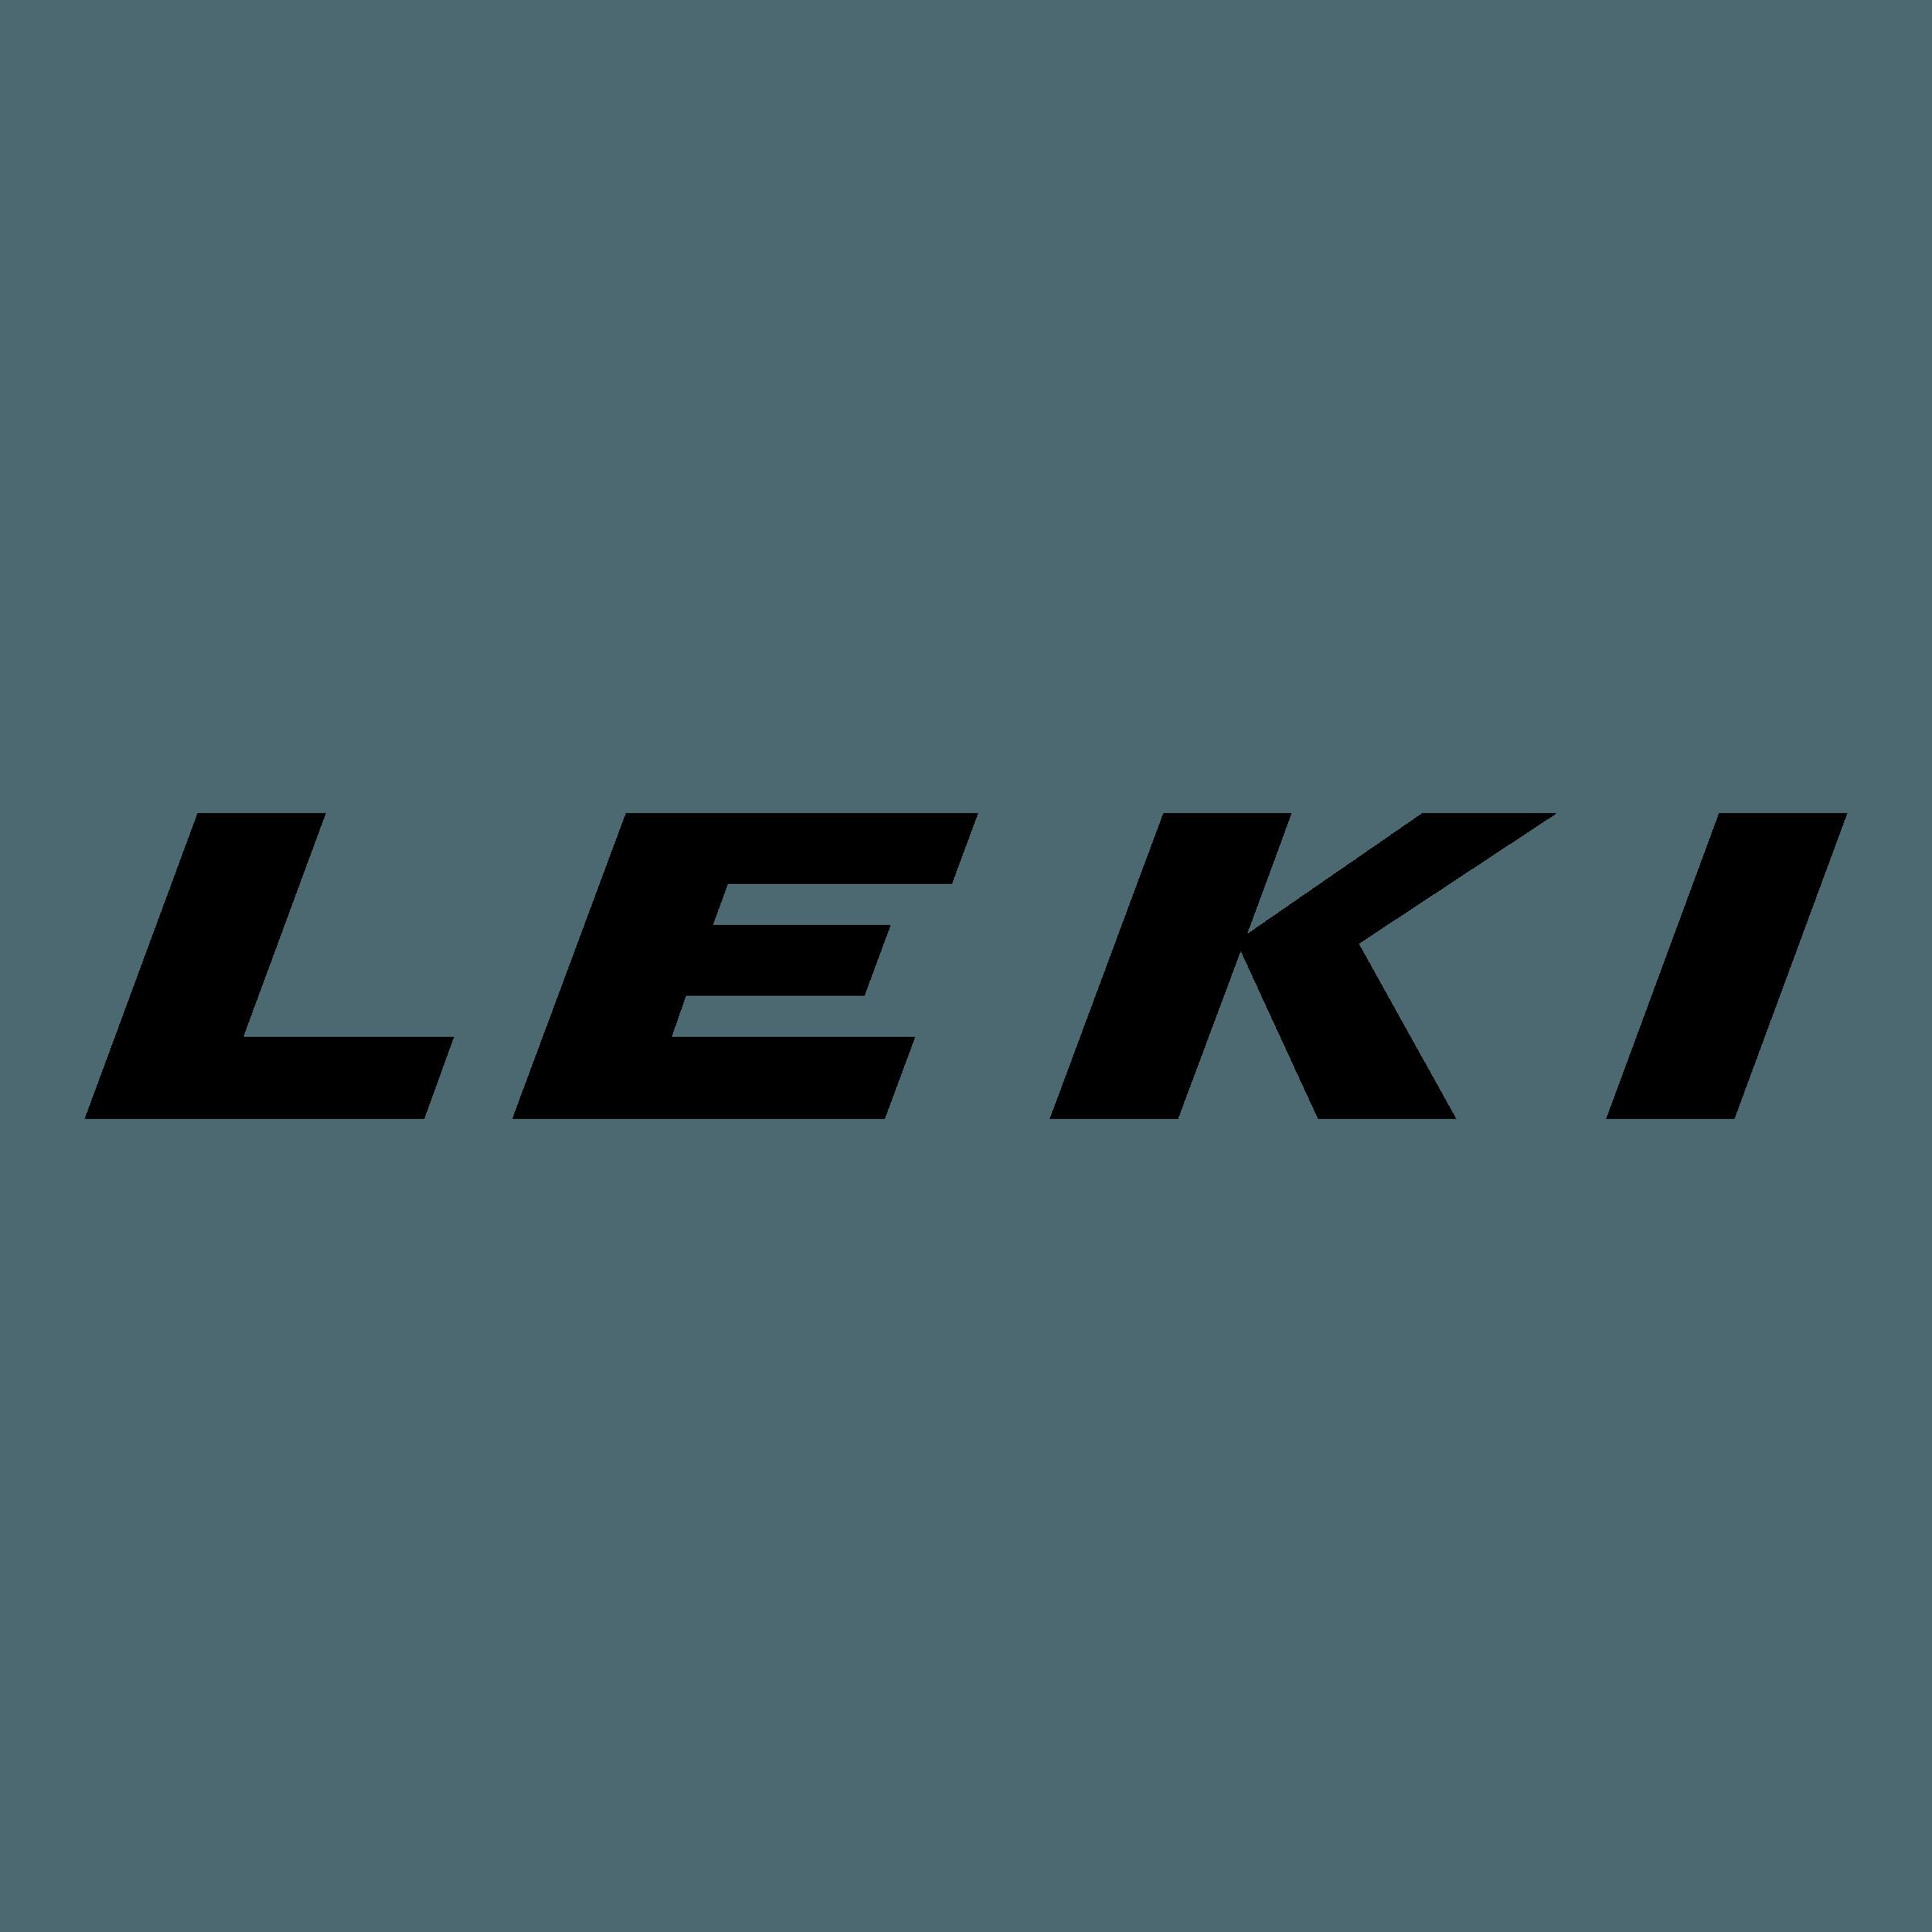 Leki Logo - Leki Logo PNG Transparent & SVG Vector